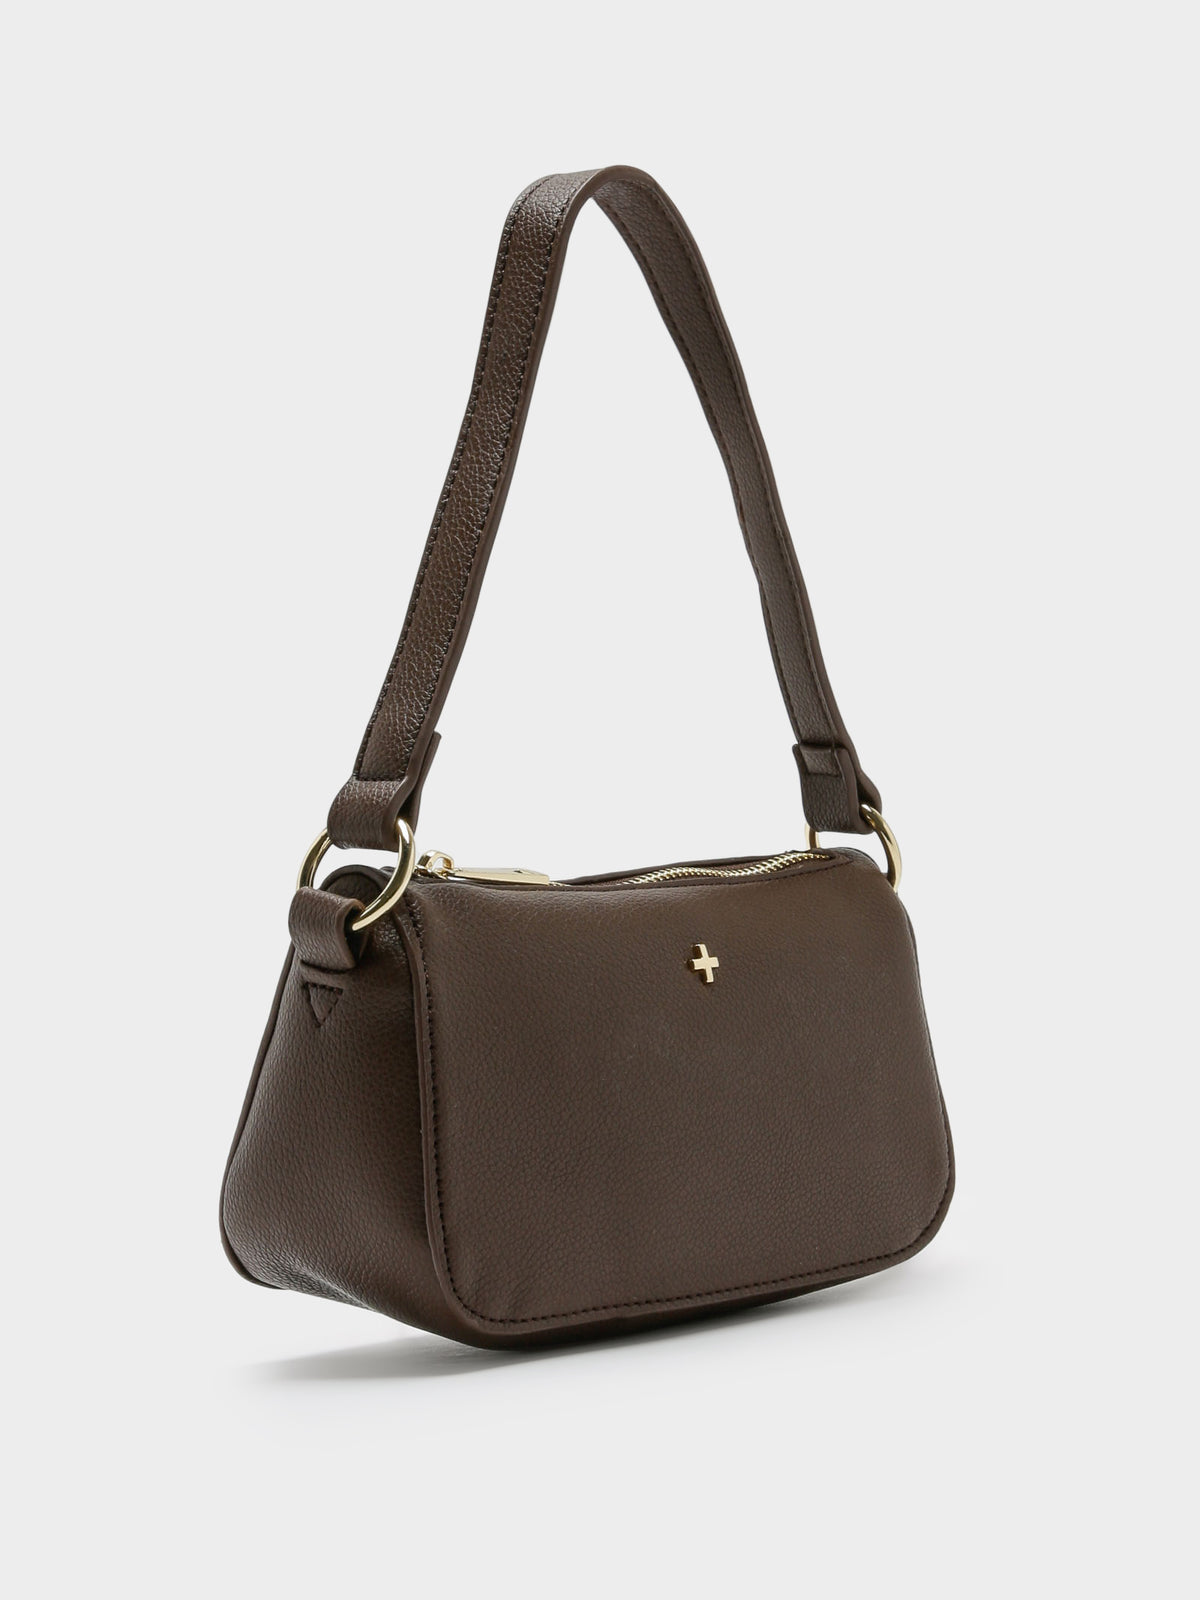 Valencia Shoulder Bag in Chocolate Brown